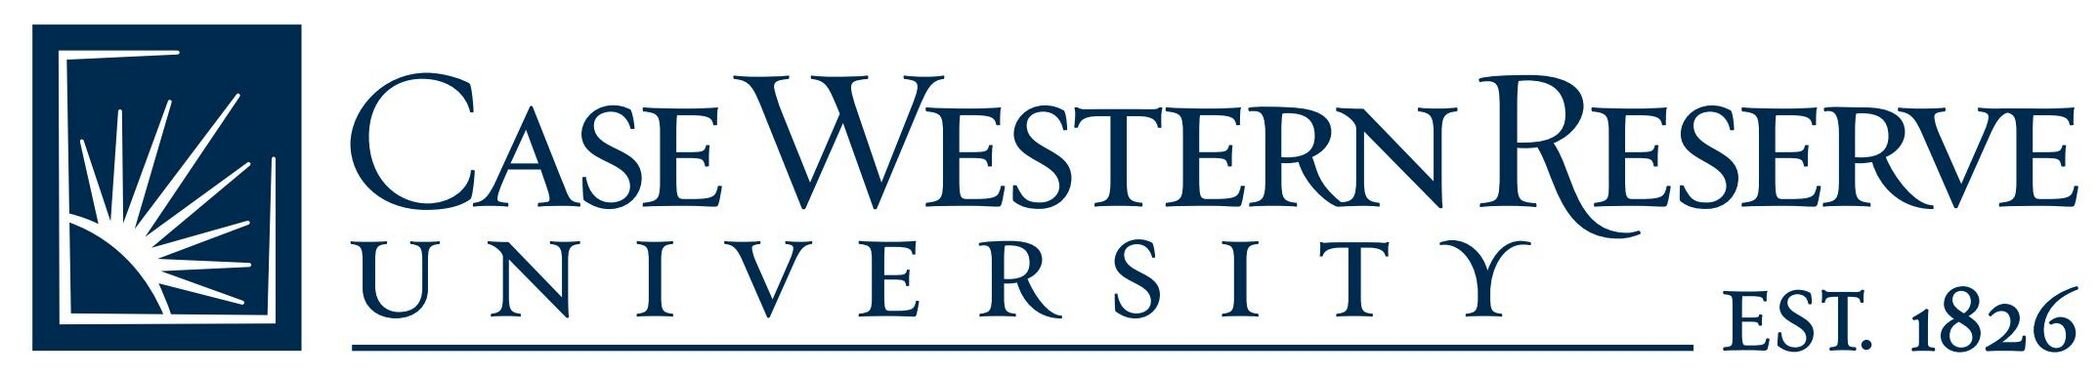 Case Western University .jpg